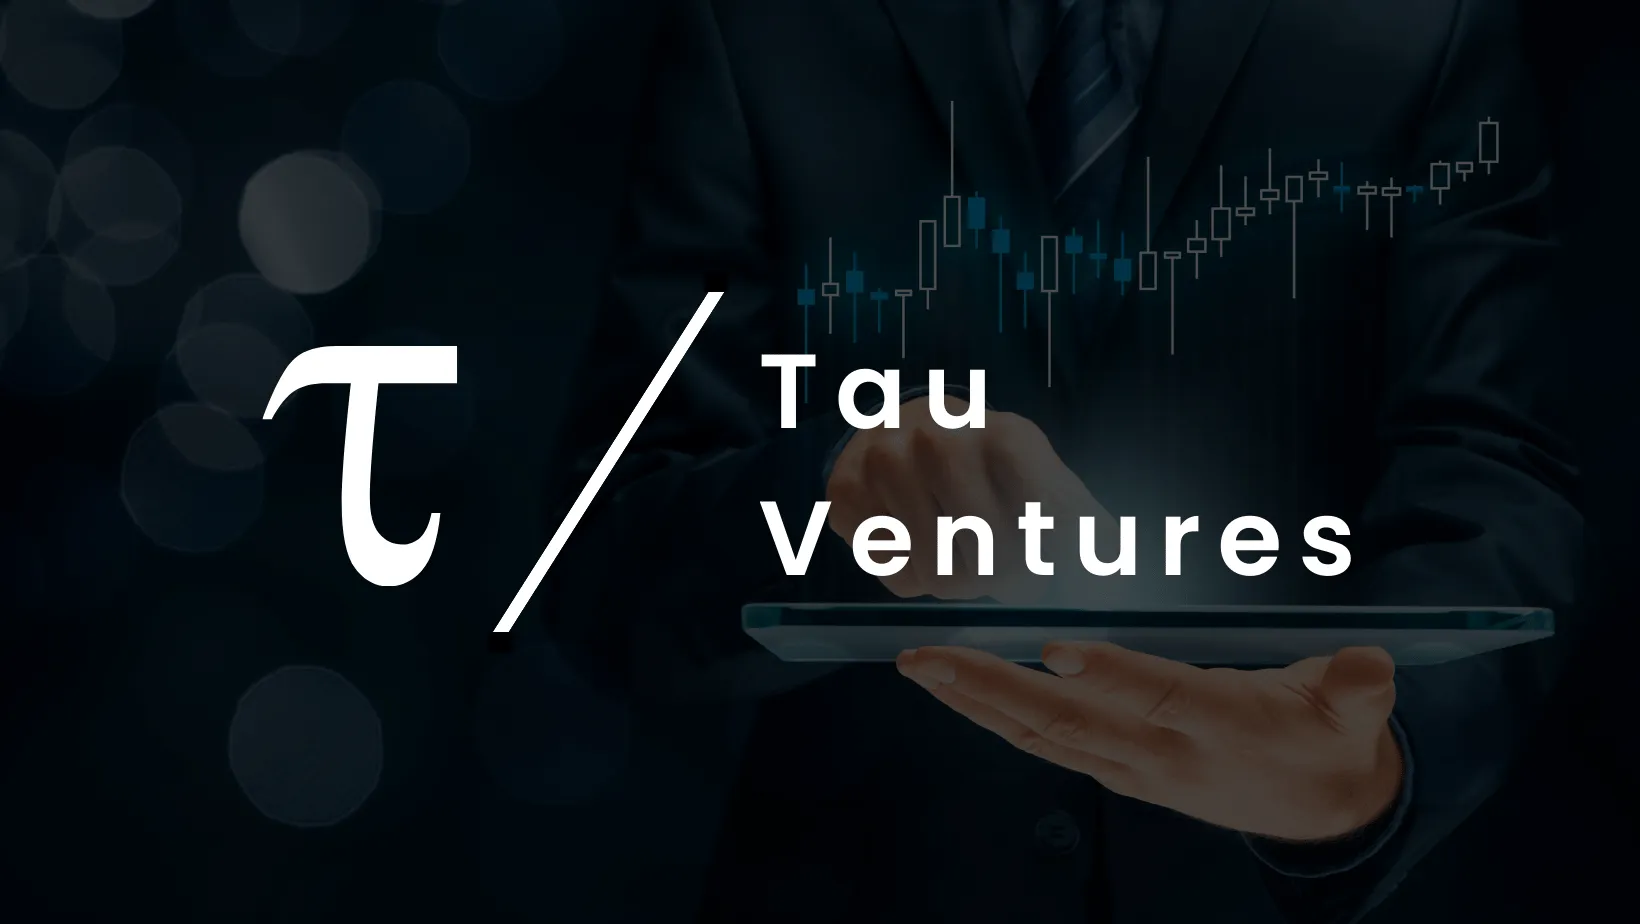 White Tau Ventures logo over a dark background.